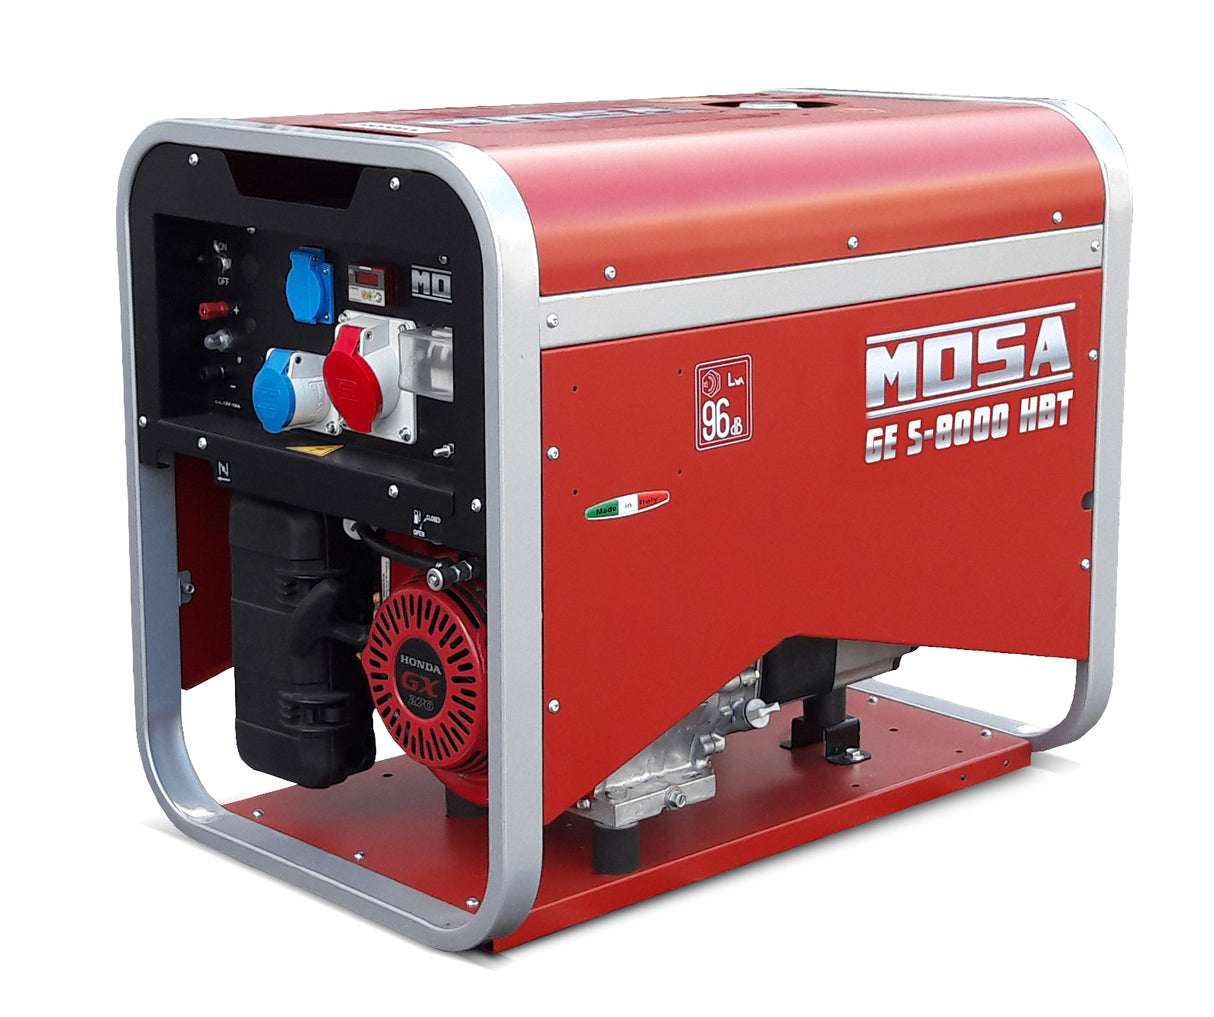 Portable power generator MOSA GES 8054 HBT IP54